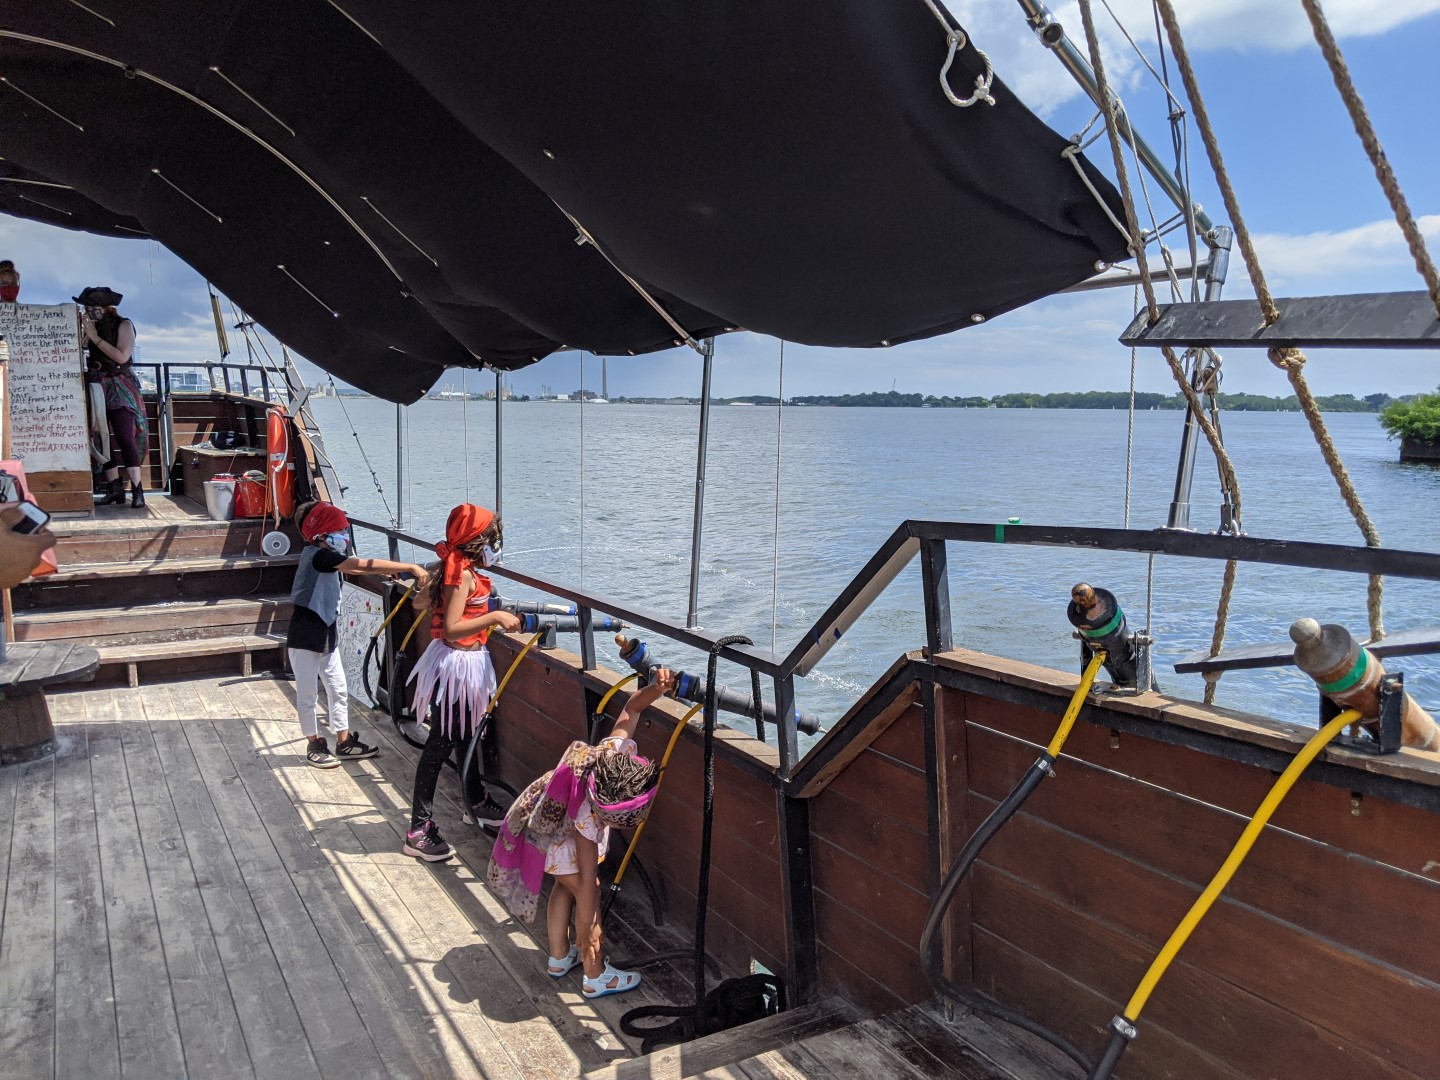 Kids on Pirate Life boat Toronto